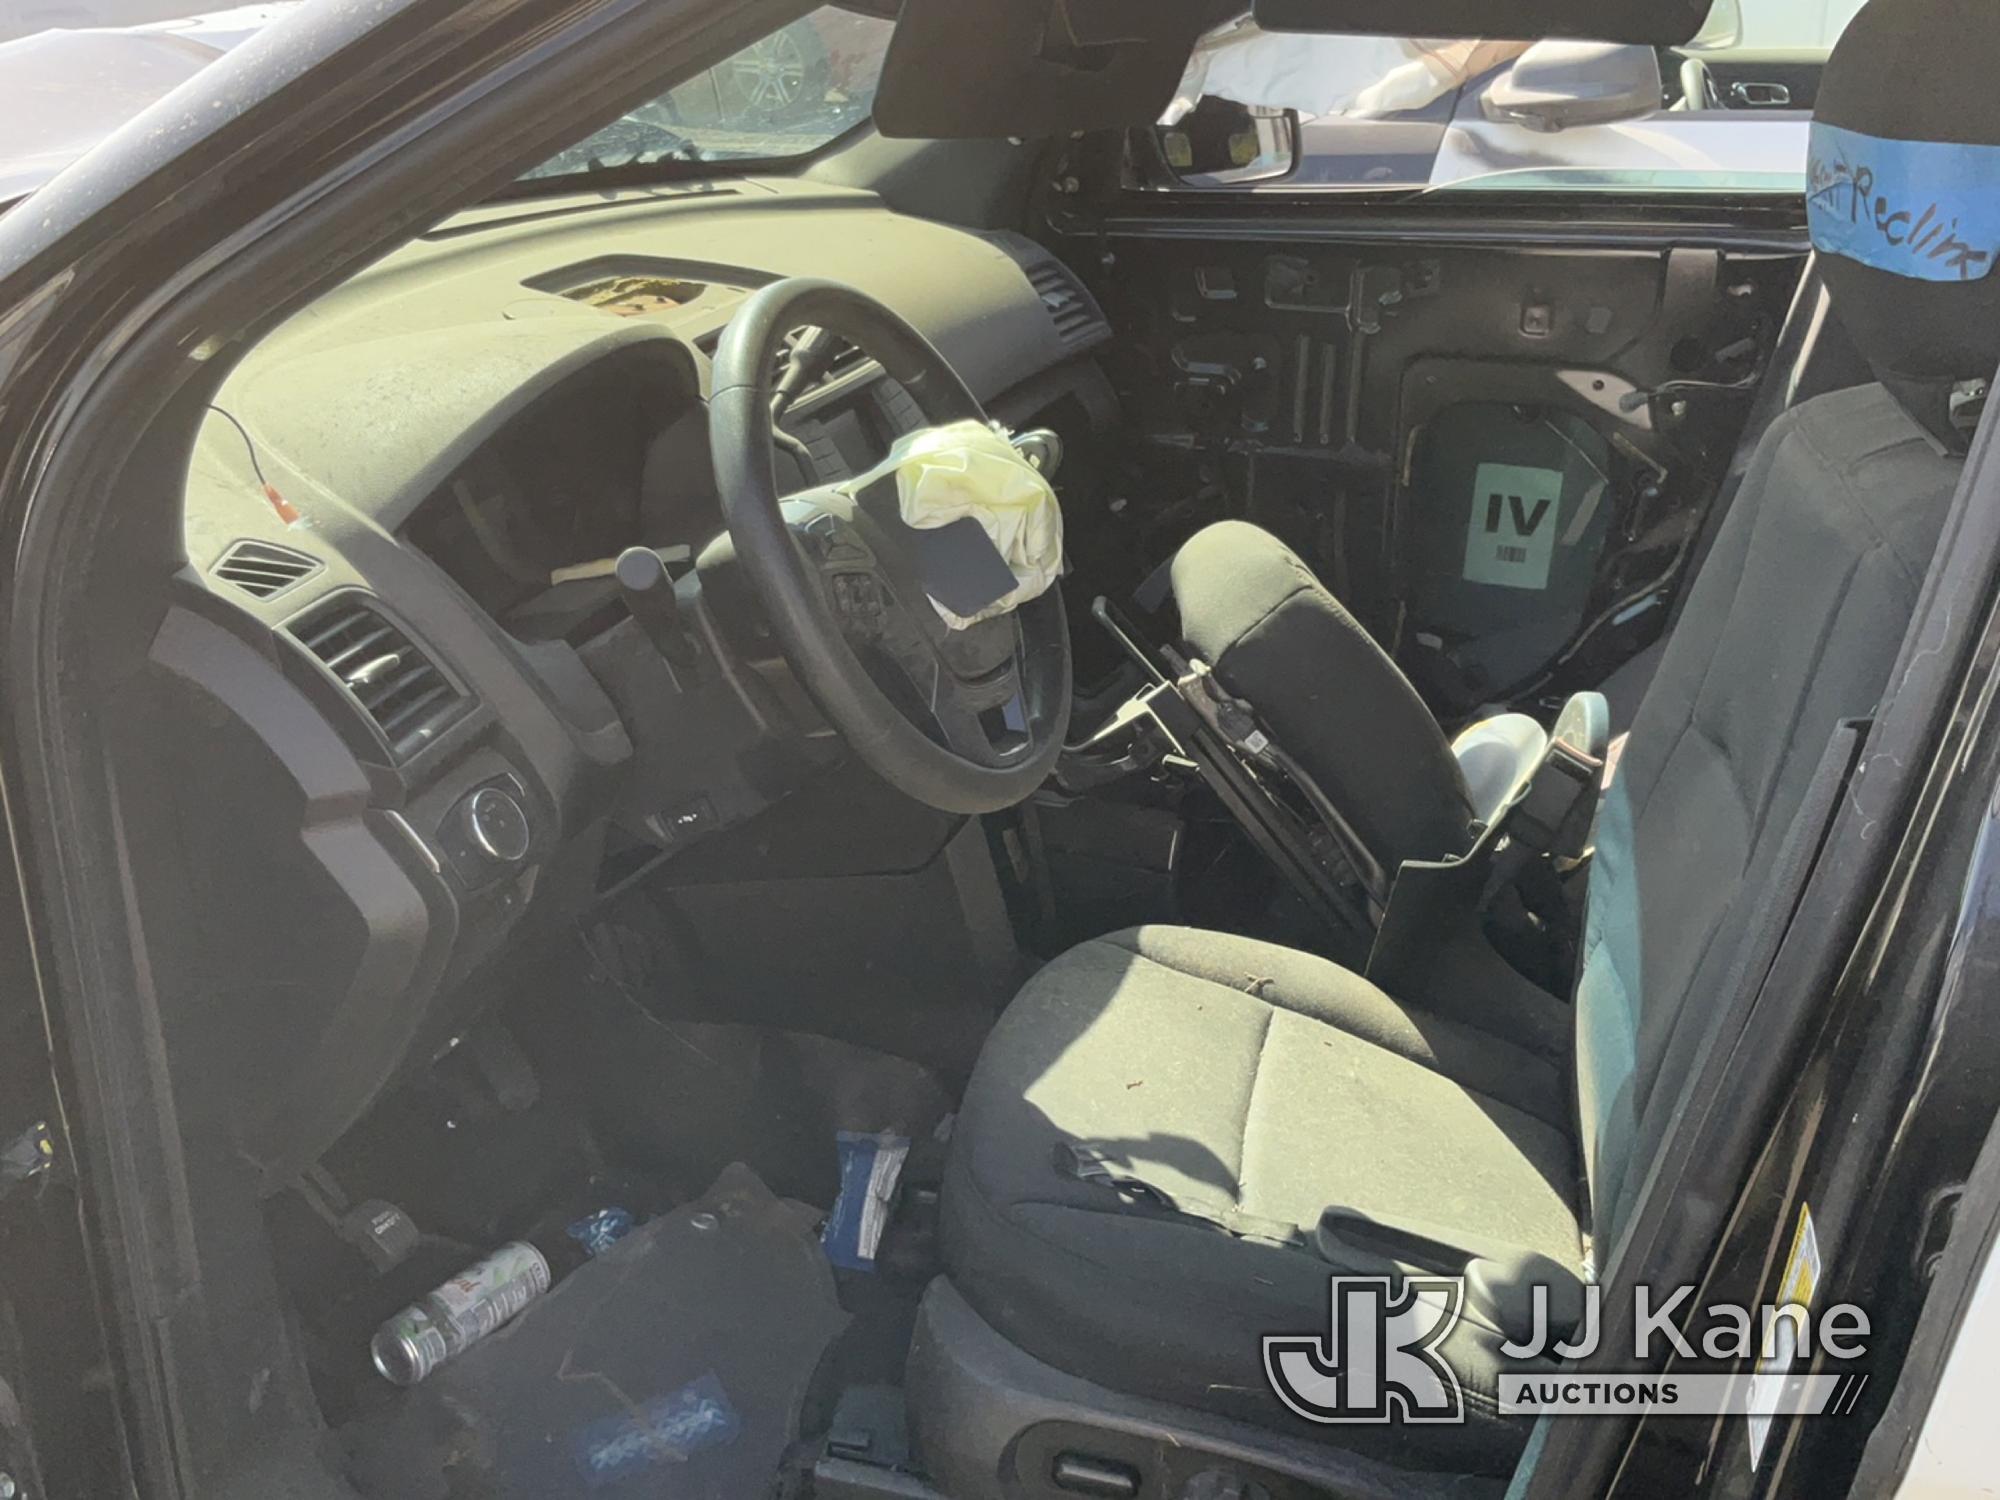 (Jurupa Valley, CA) 2019 Ford Explorer AWD Police Interceptor Sport Utility Vehicle Not Running , No